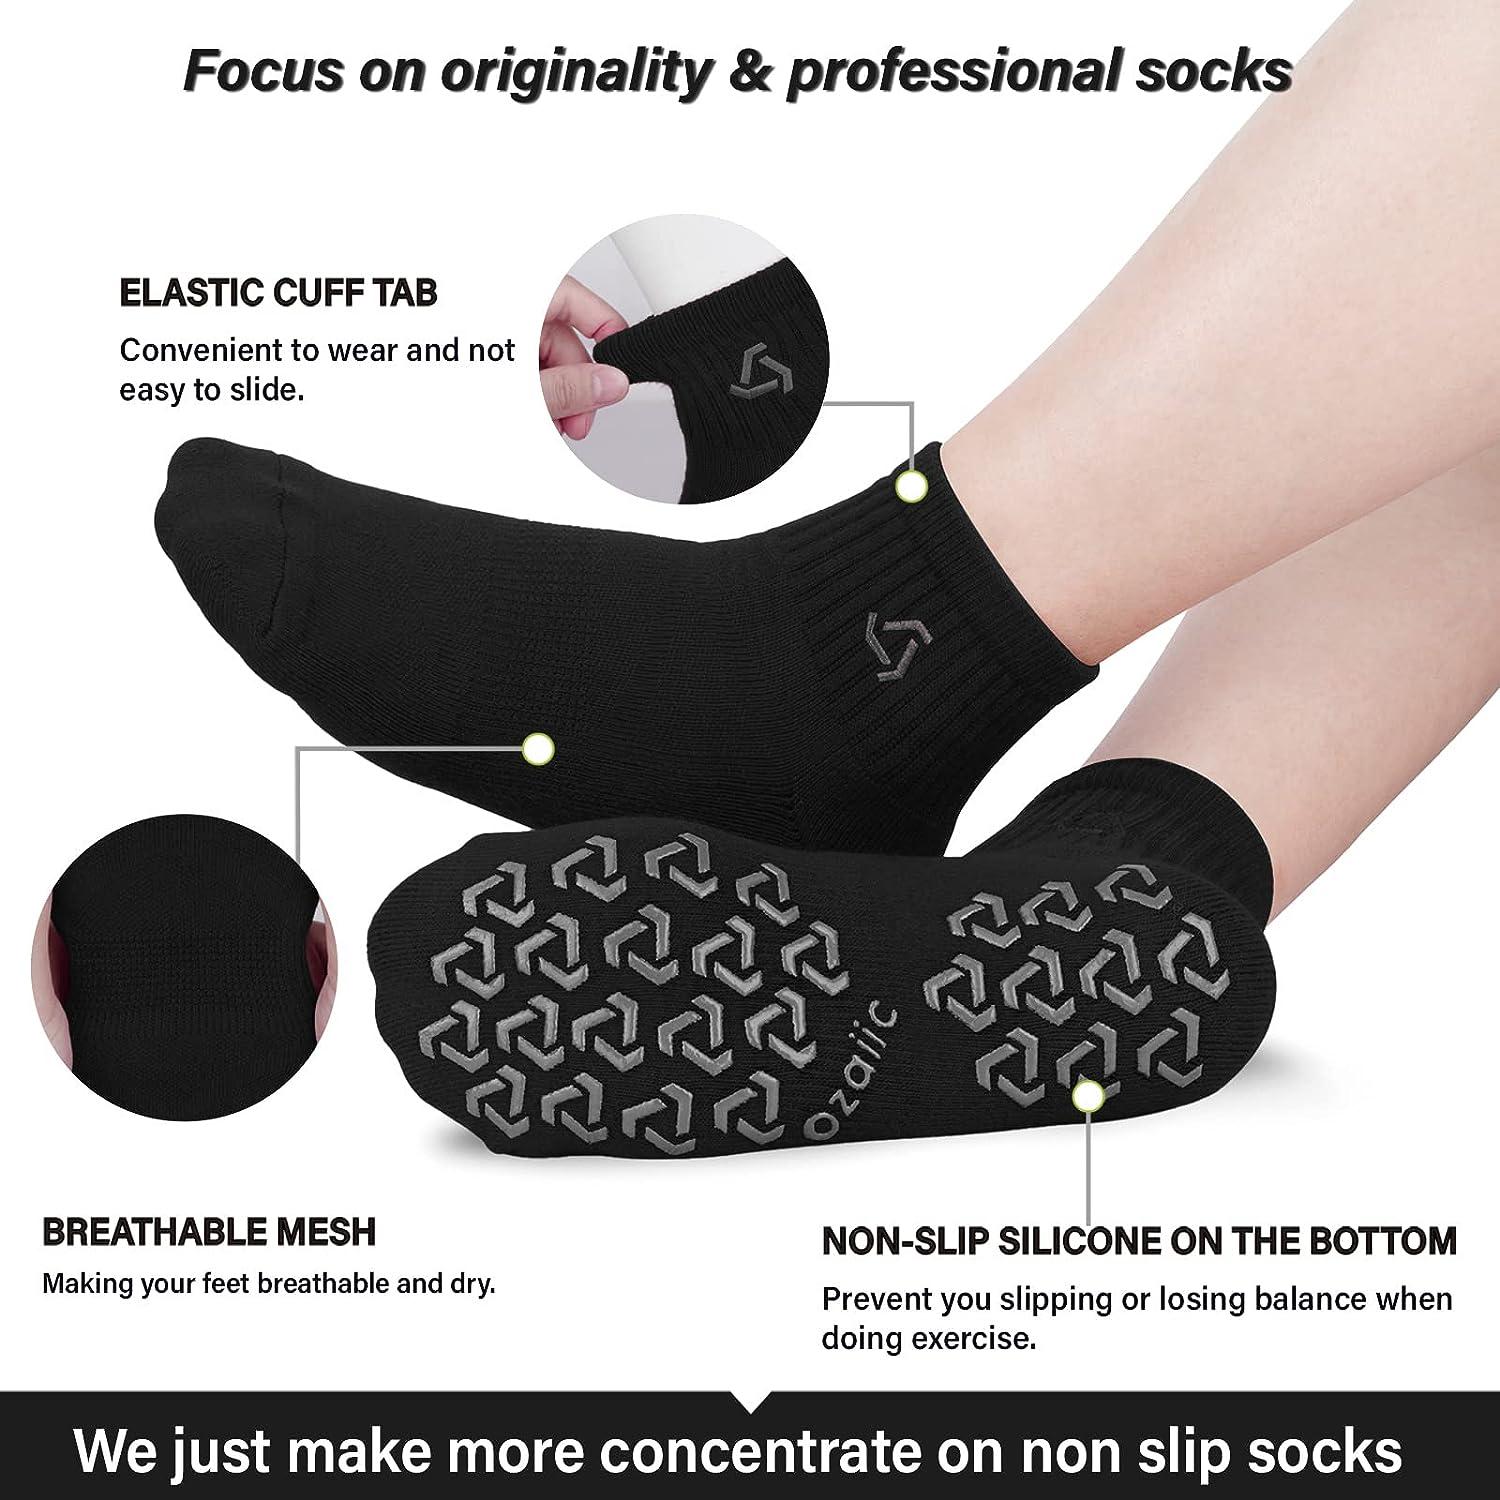 Pure Barre Grip Socks